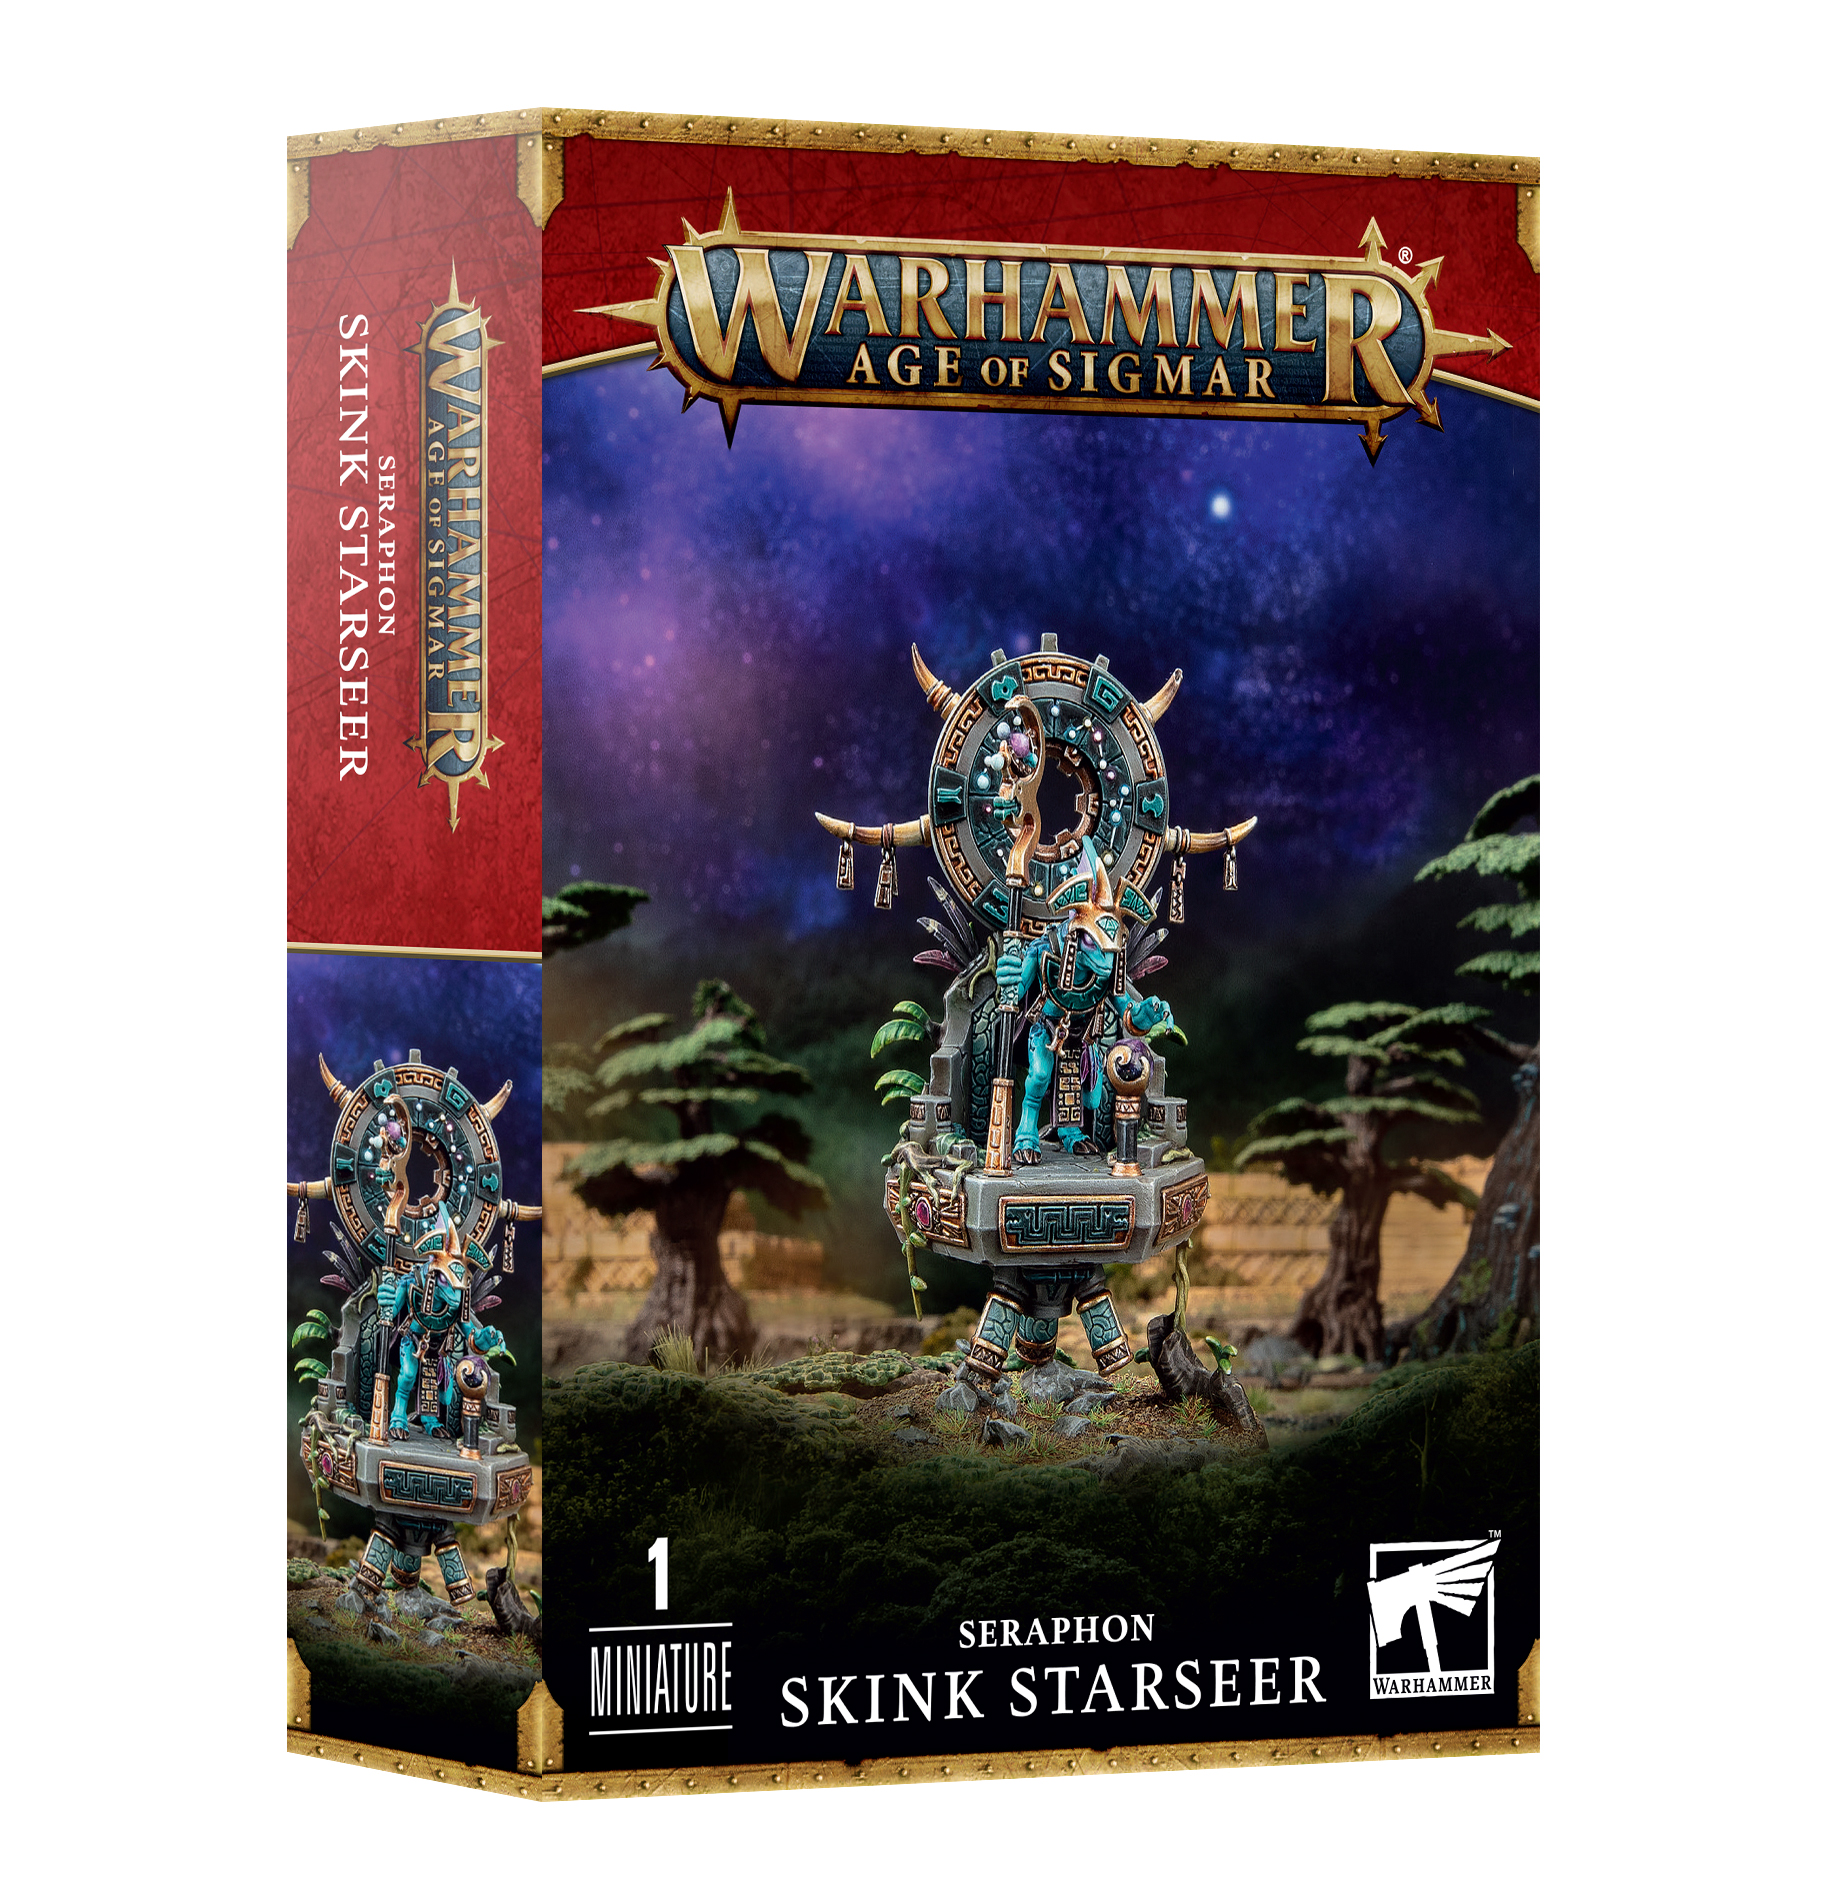 Skink Starseer - 88-25 - Seraphon - Warhammer Age of Sigmar